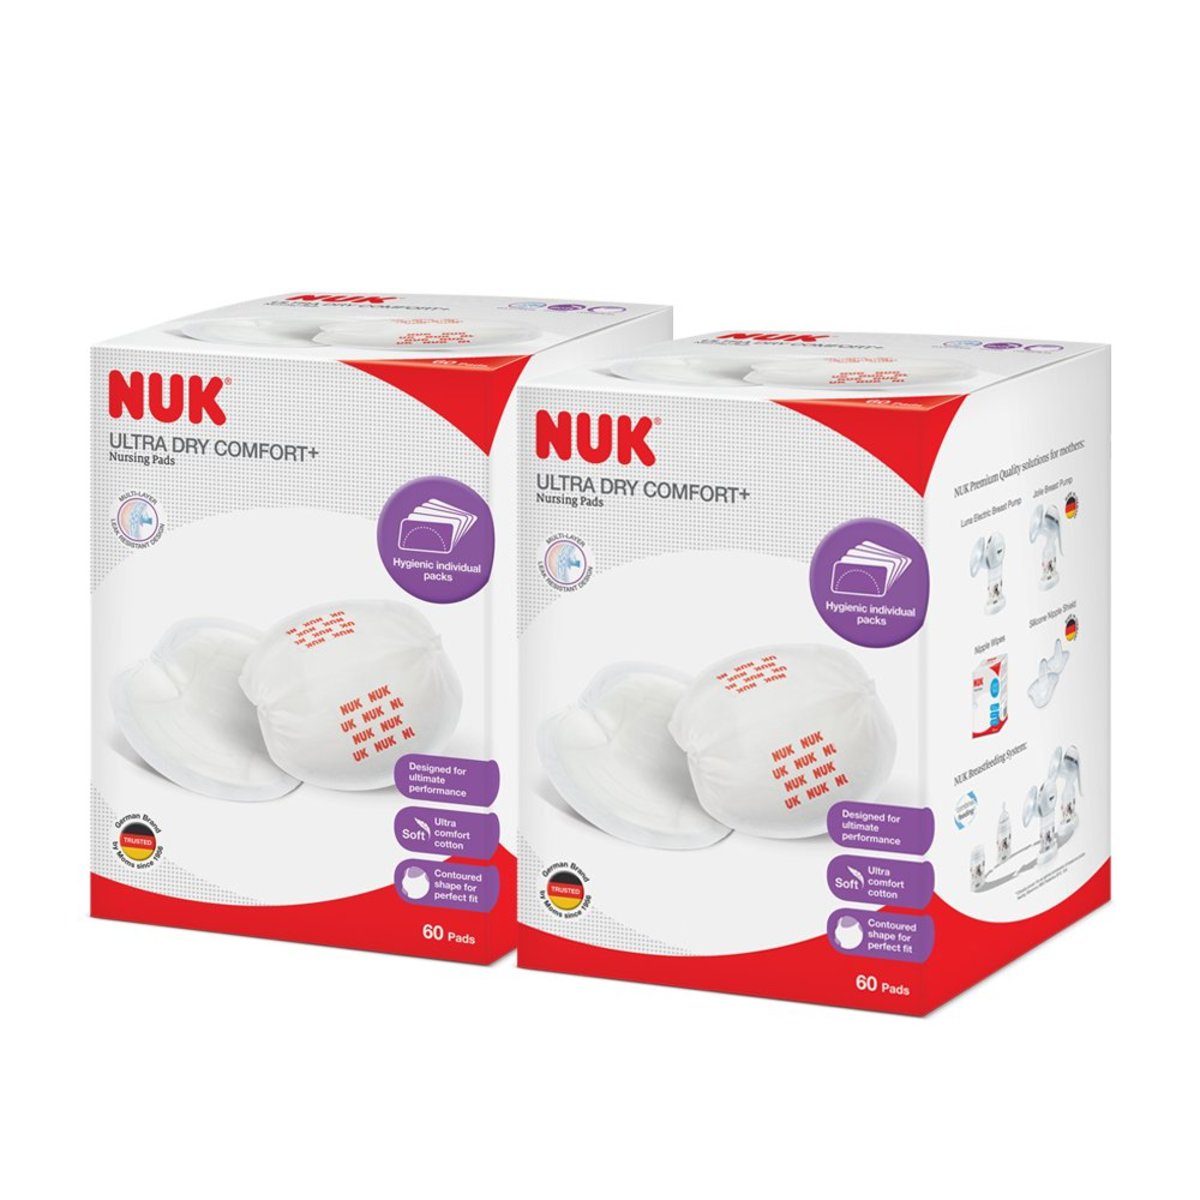 nuk-ultra-dry-comfort-nursing-pads-60-pcs-box-1